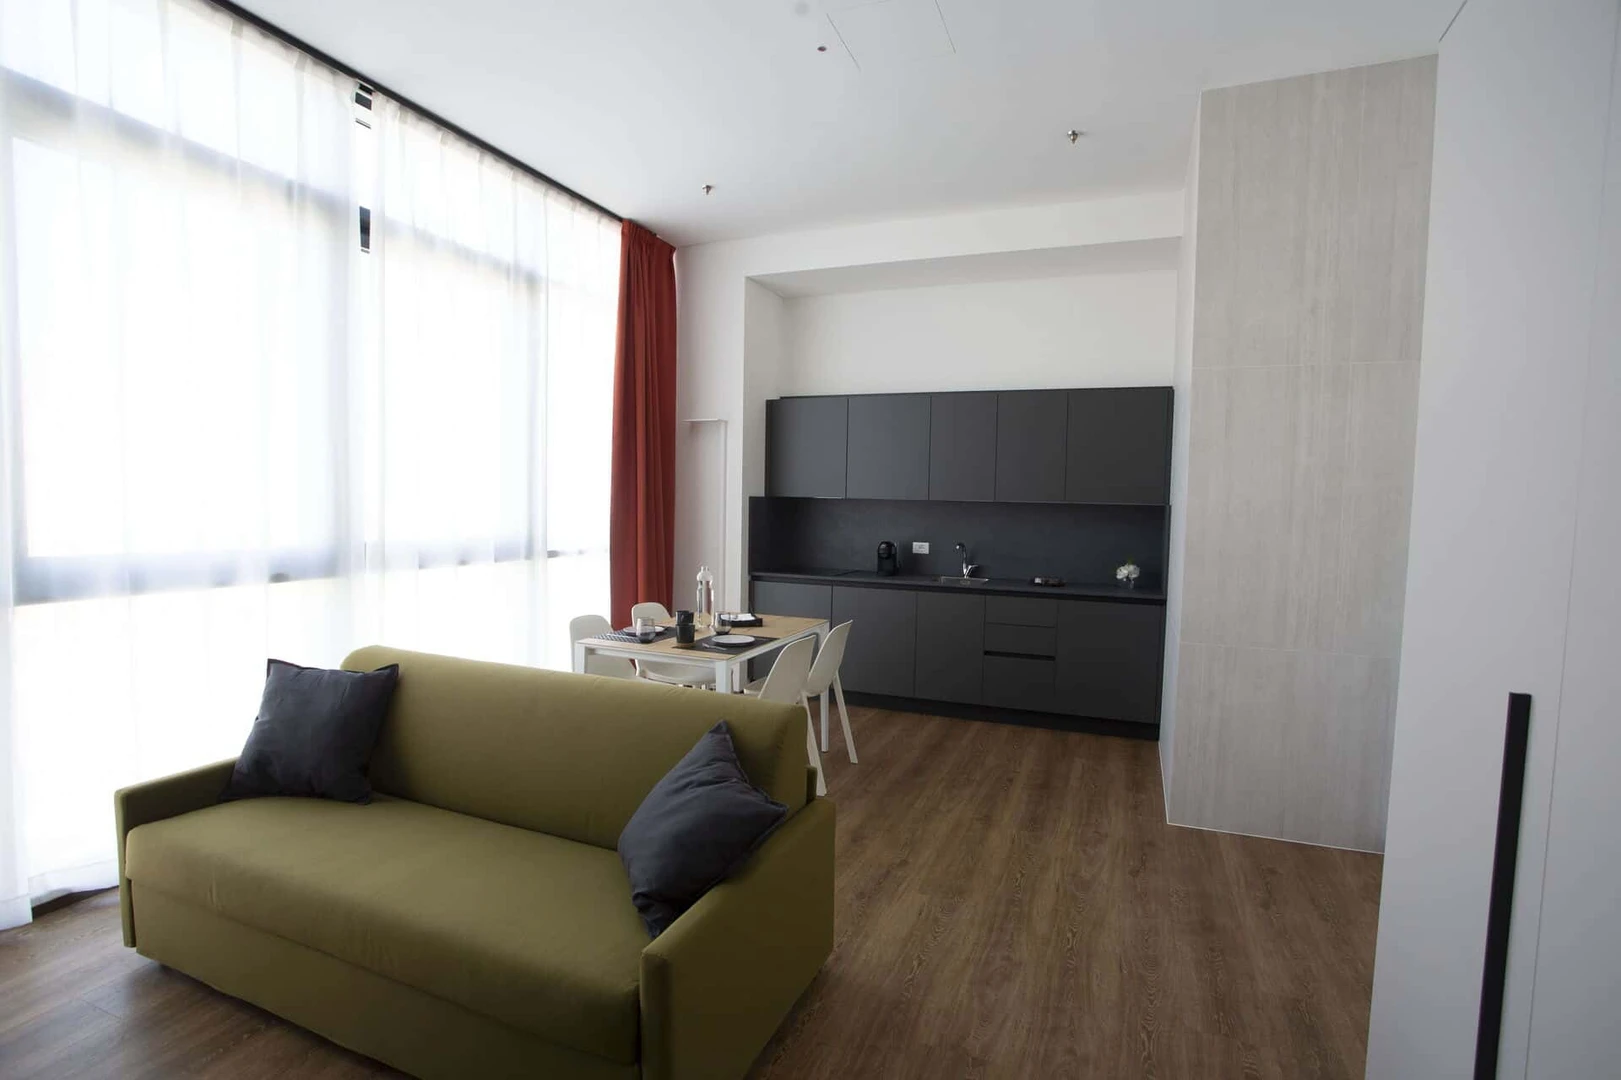 Two bedroom accommodation in Venezia